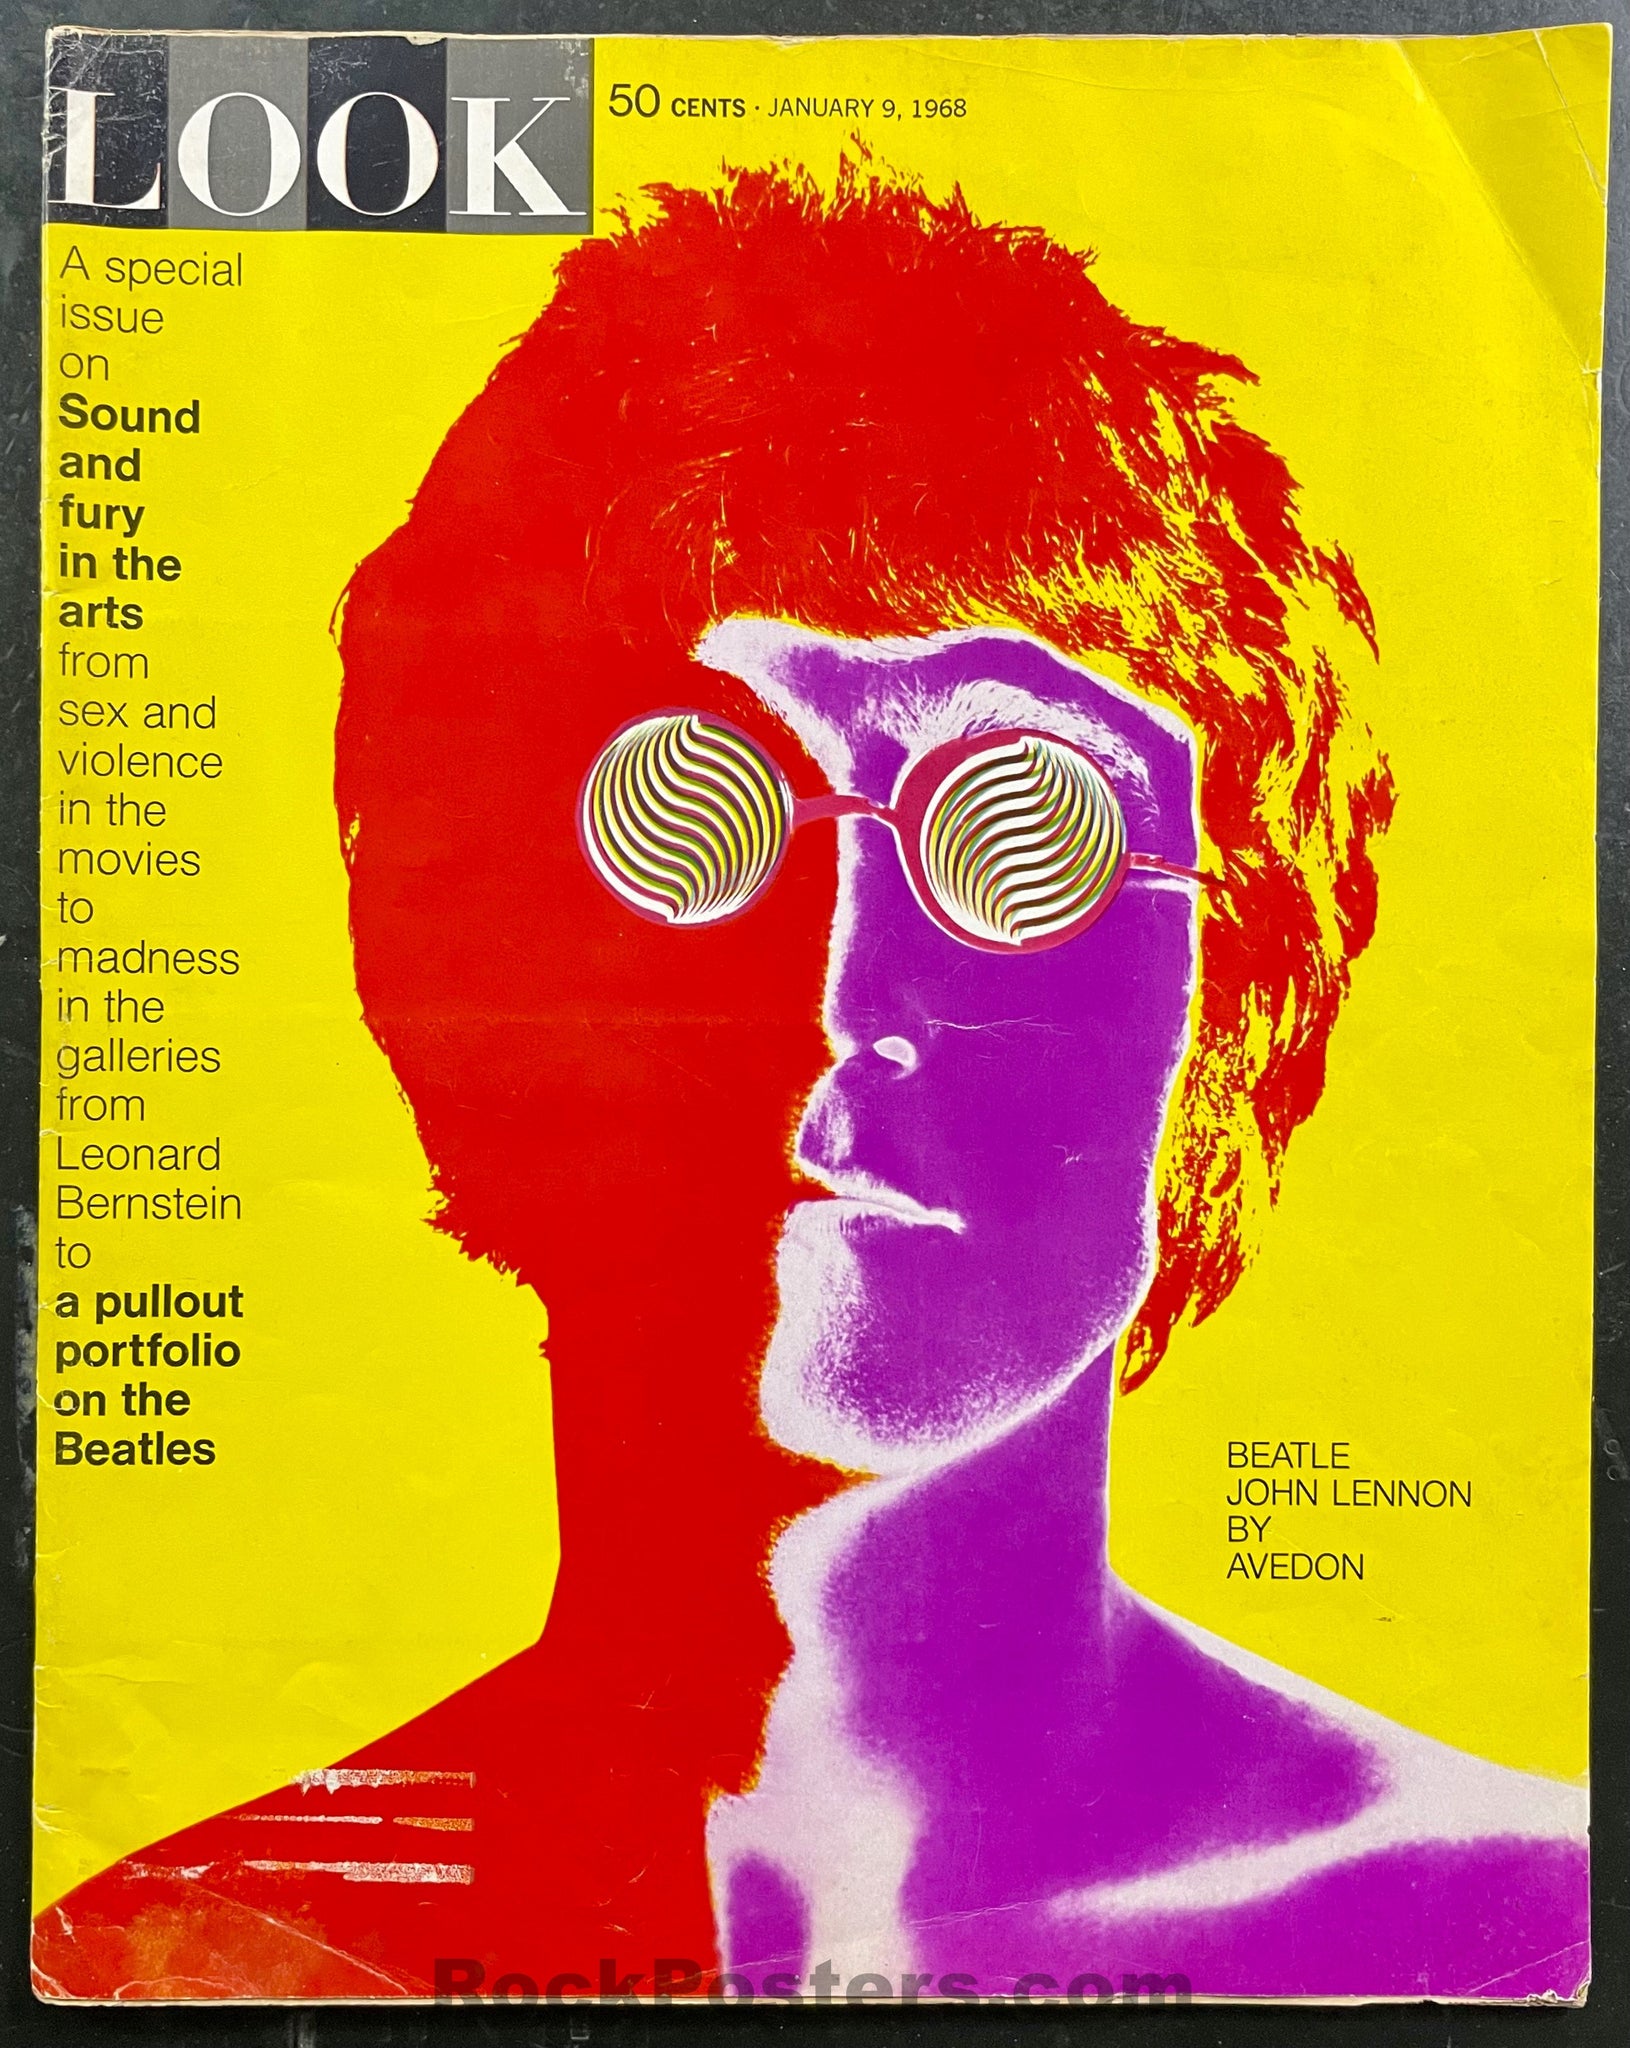 AUCTION - The Beatles - John Lennon Avedon - 1968 Look Magazine - Very Good